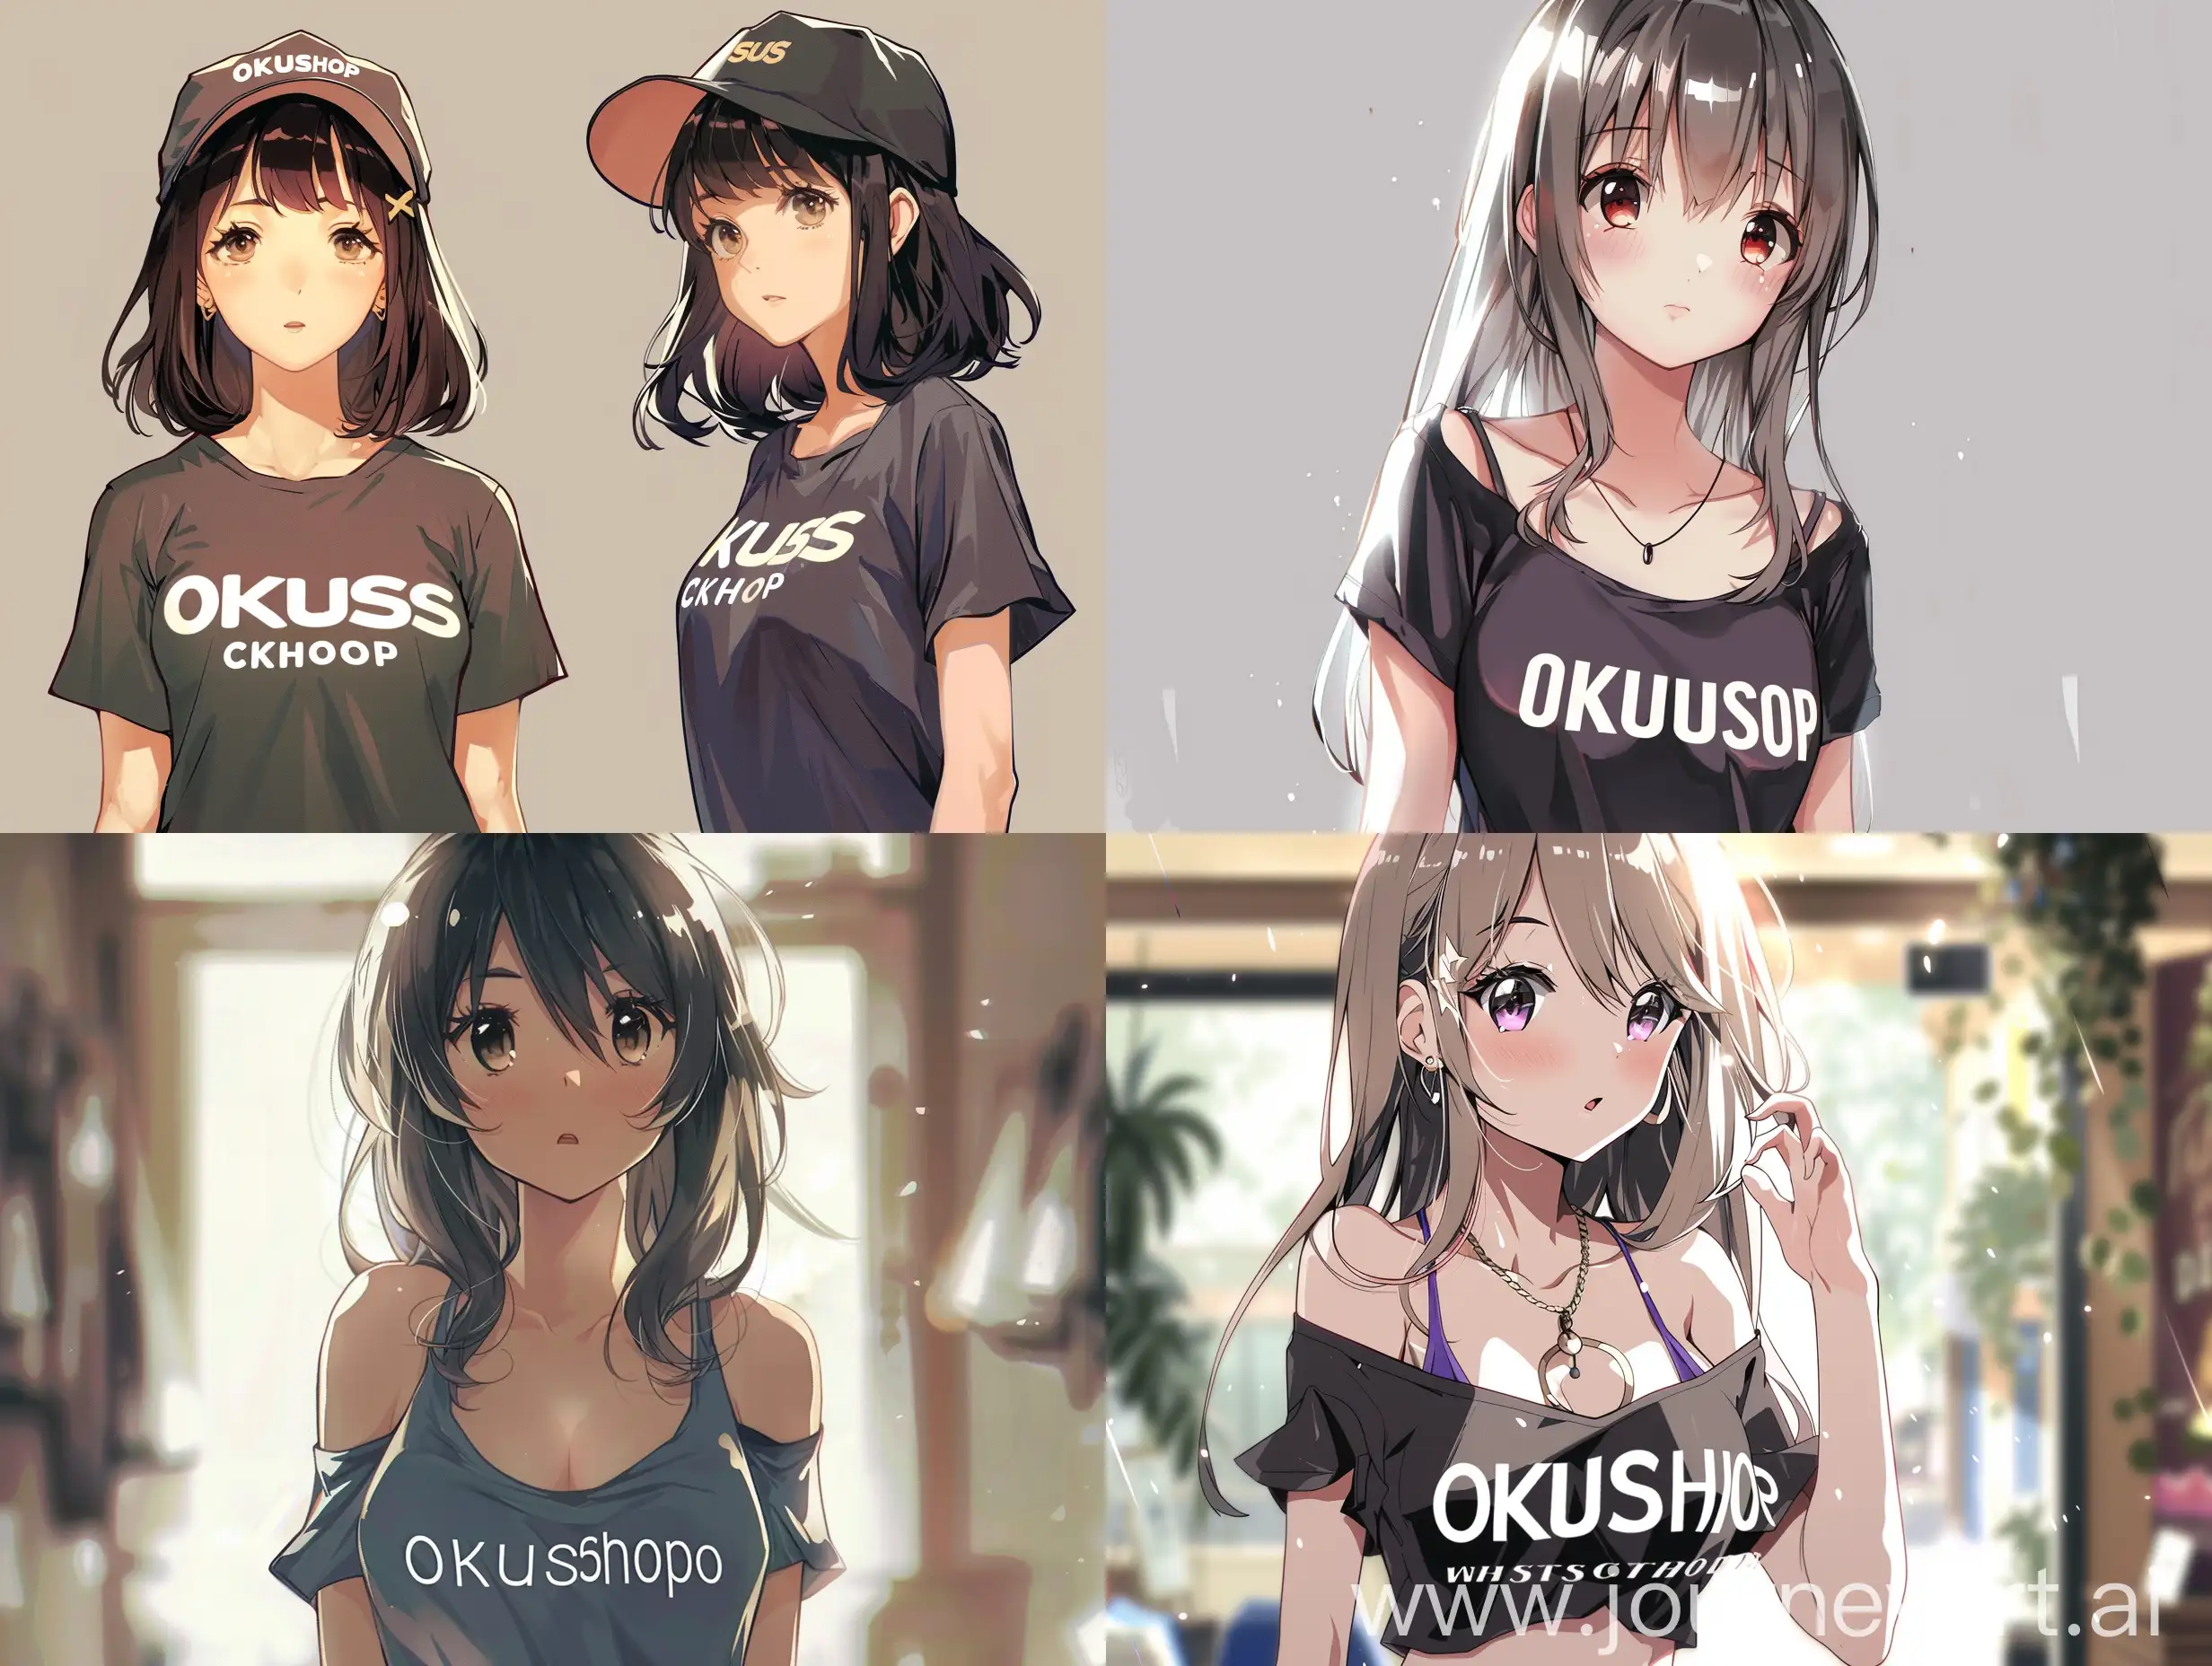 Stylish-Anime-Girl-in-OkusShop-TShirt